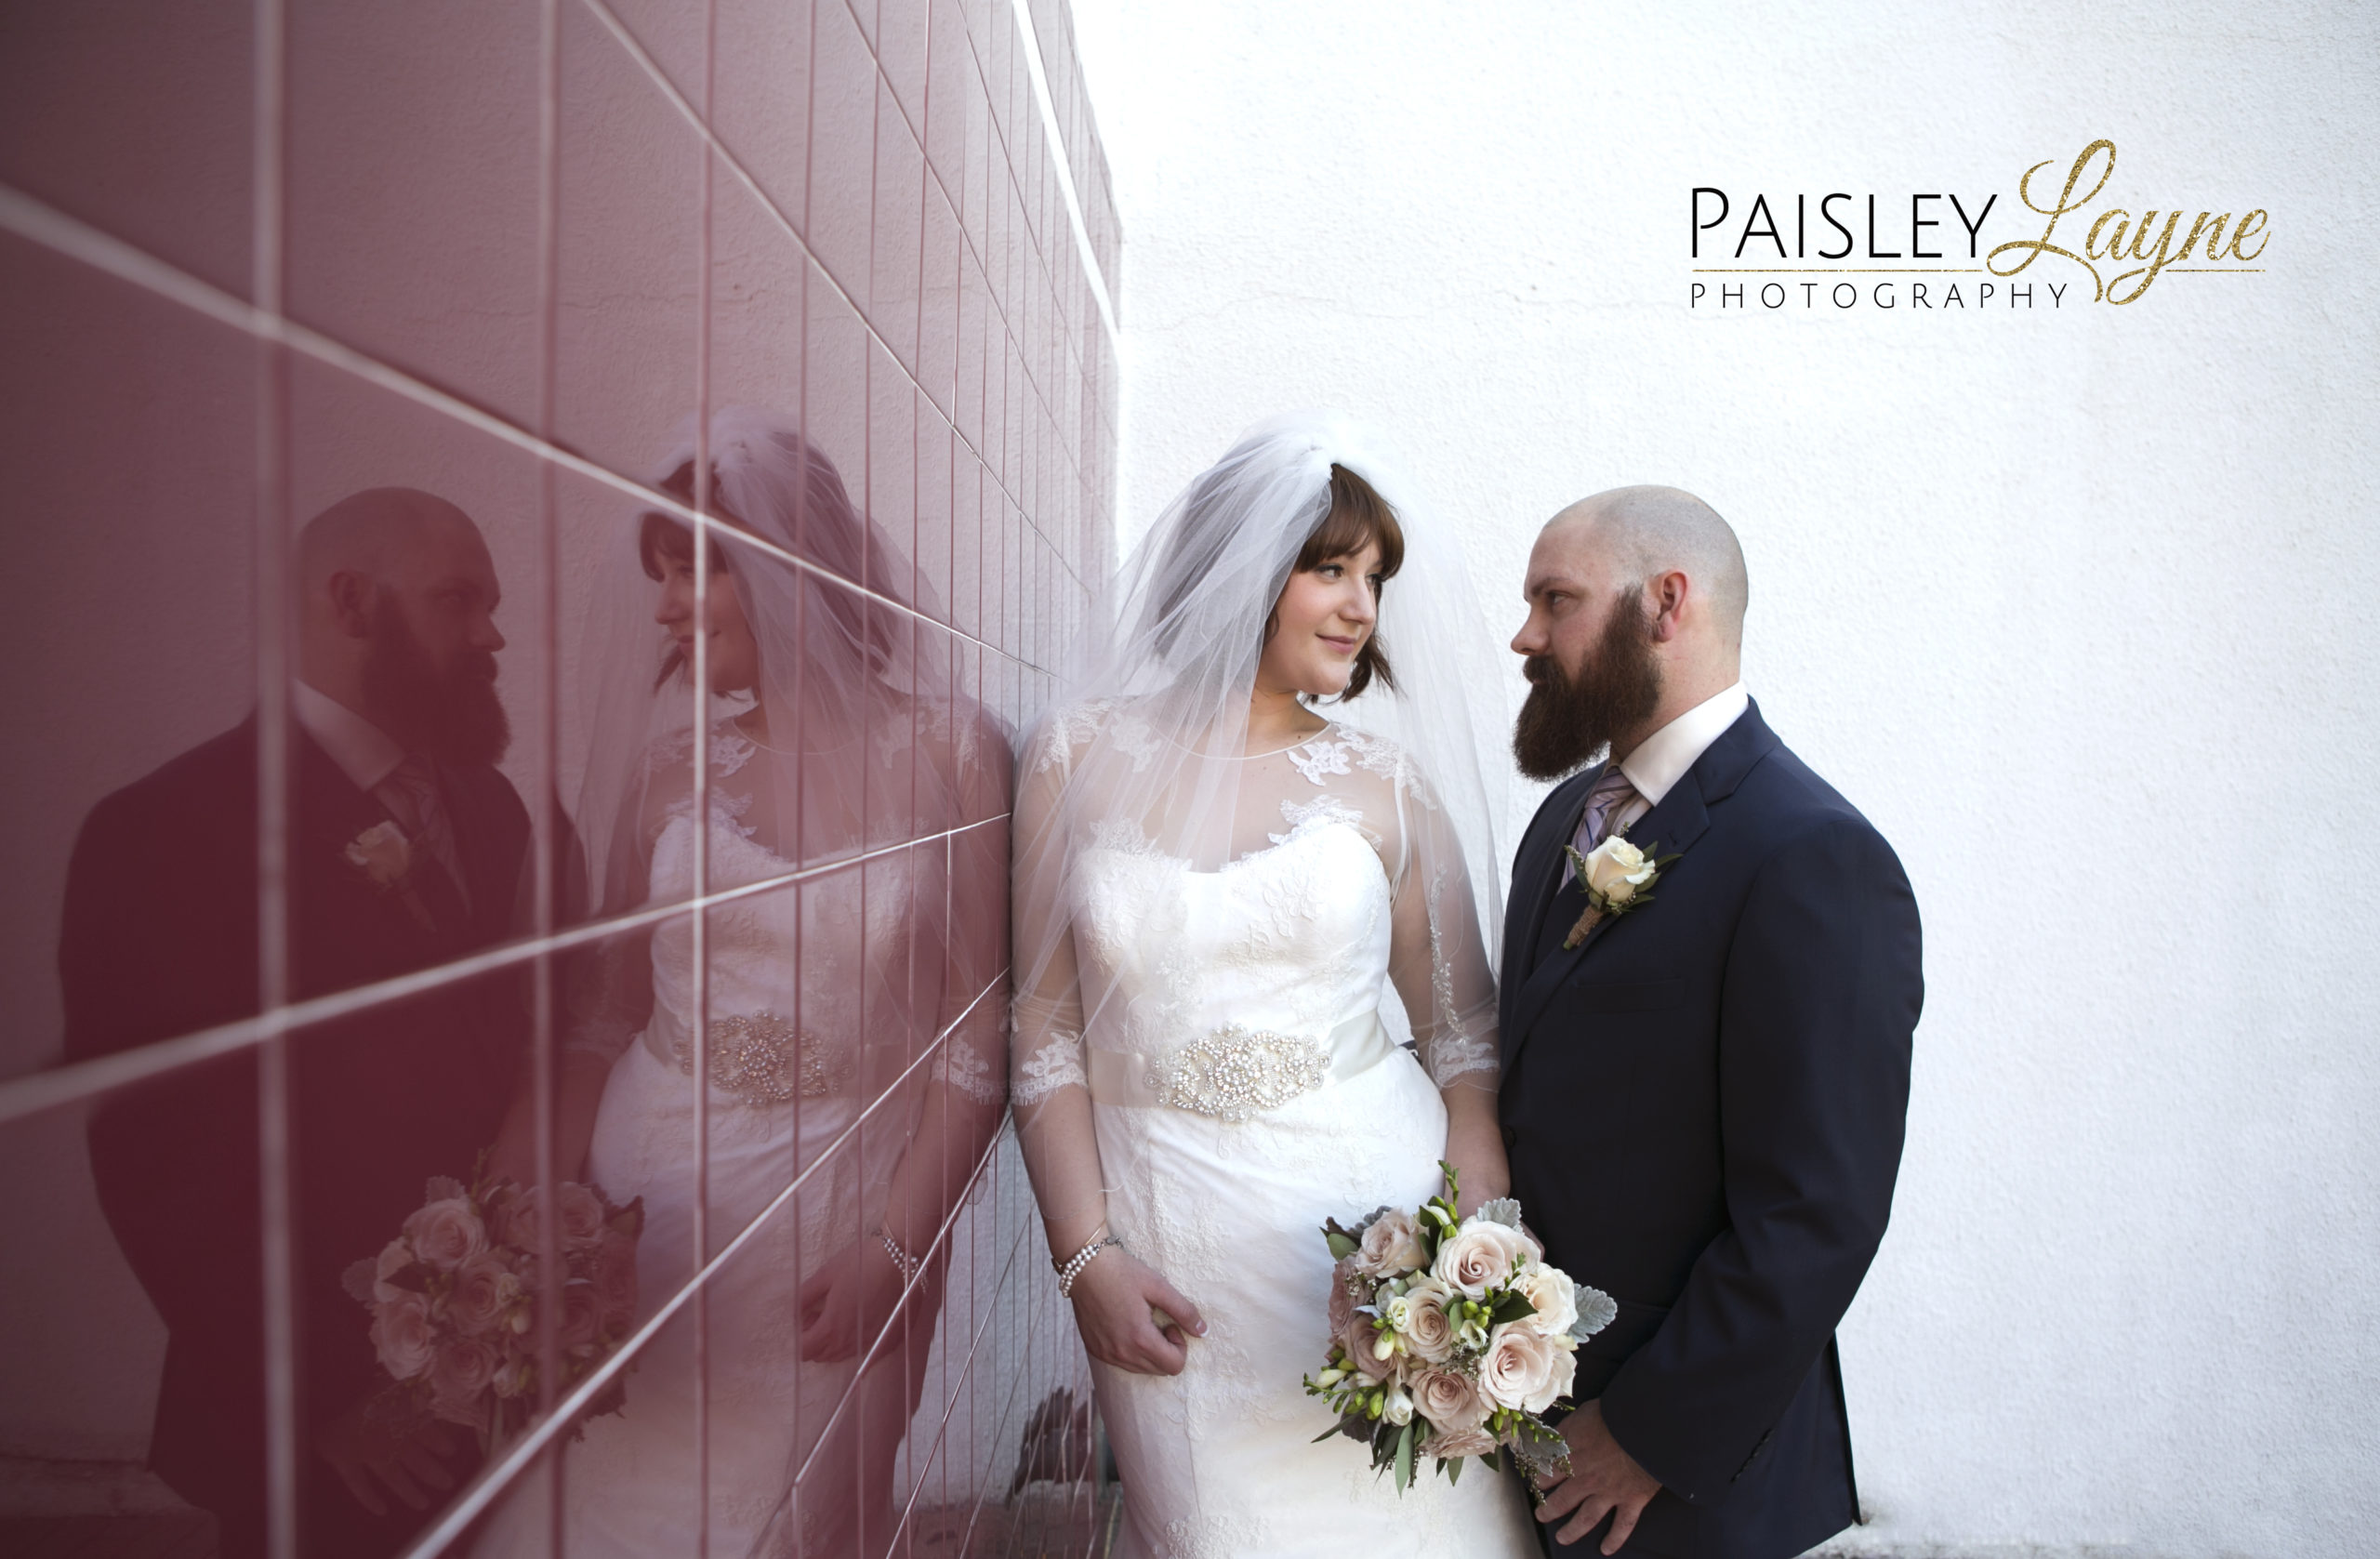 Paisley Layne Photography Wedding Couples Portraits